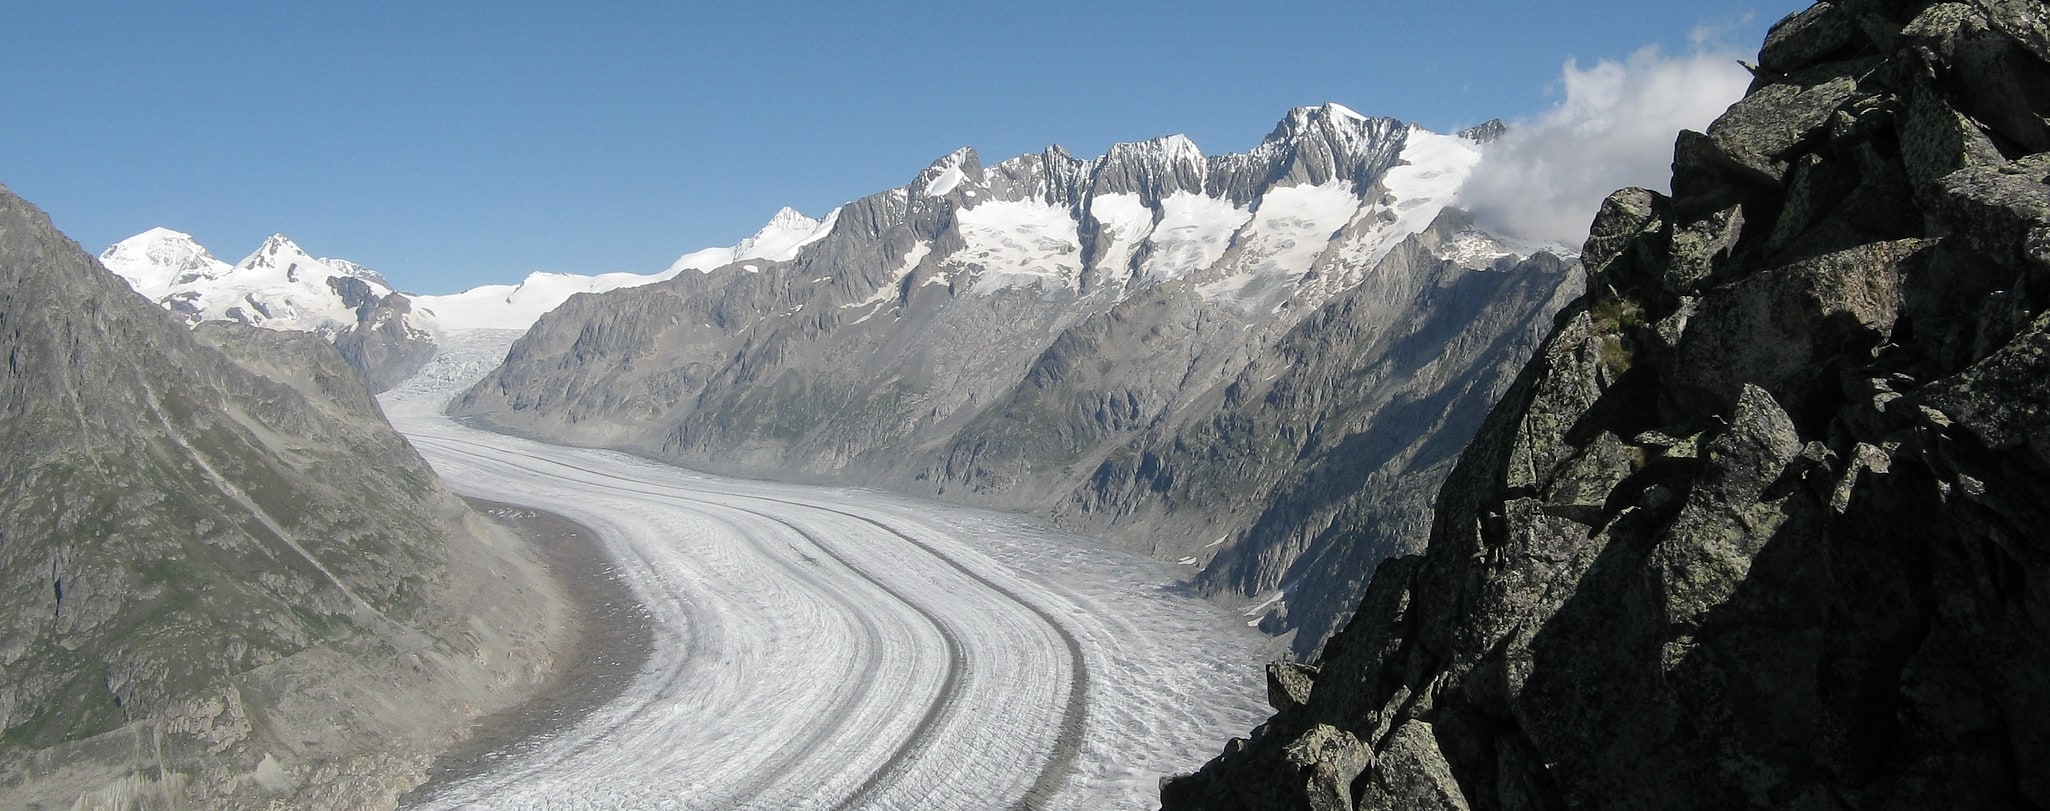 Swiss Alps Jungfrau-Aletsch, Switzerland